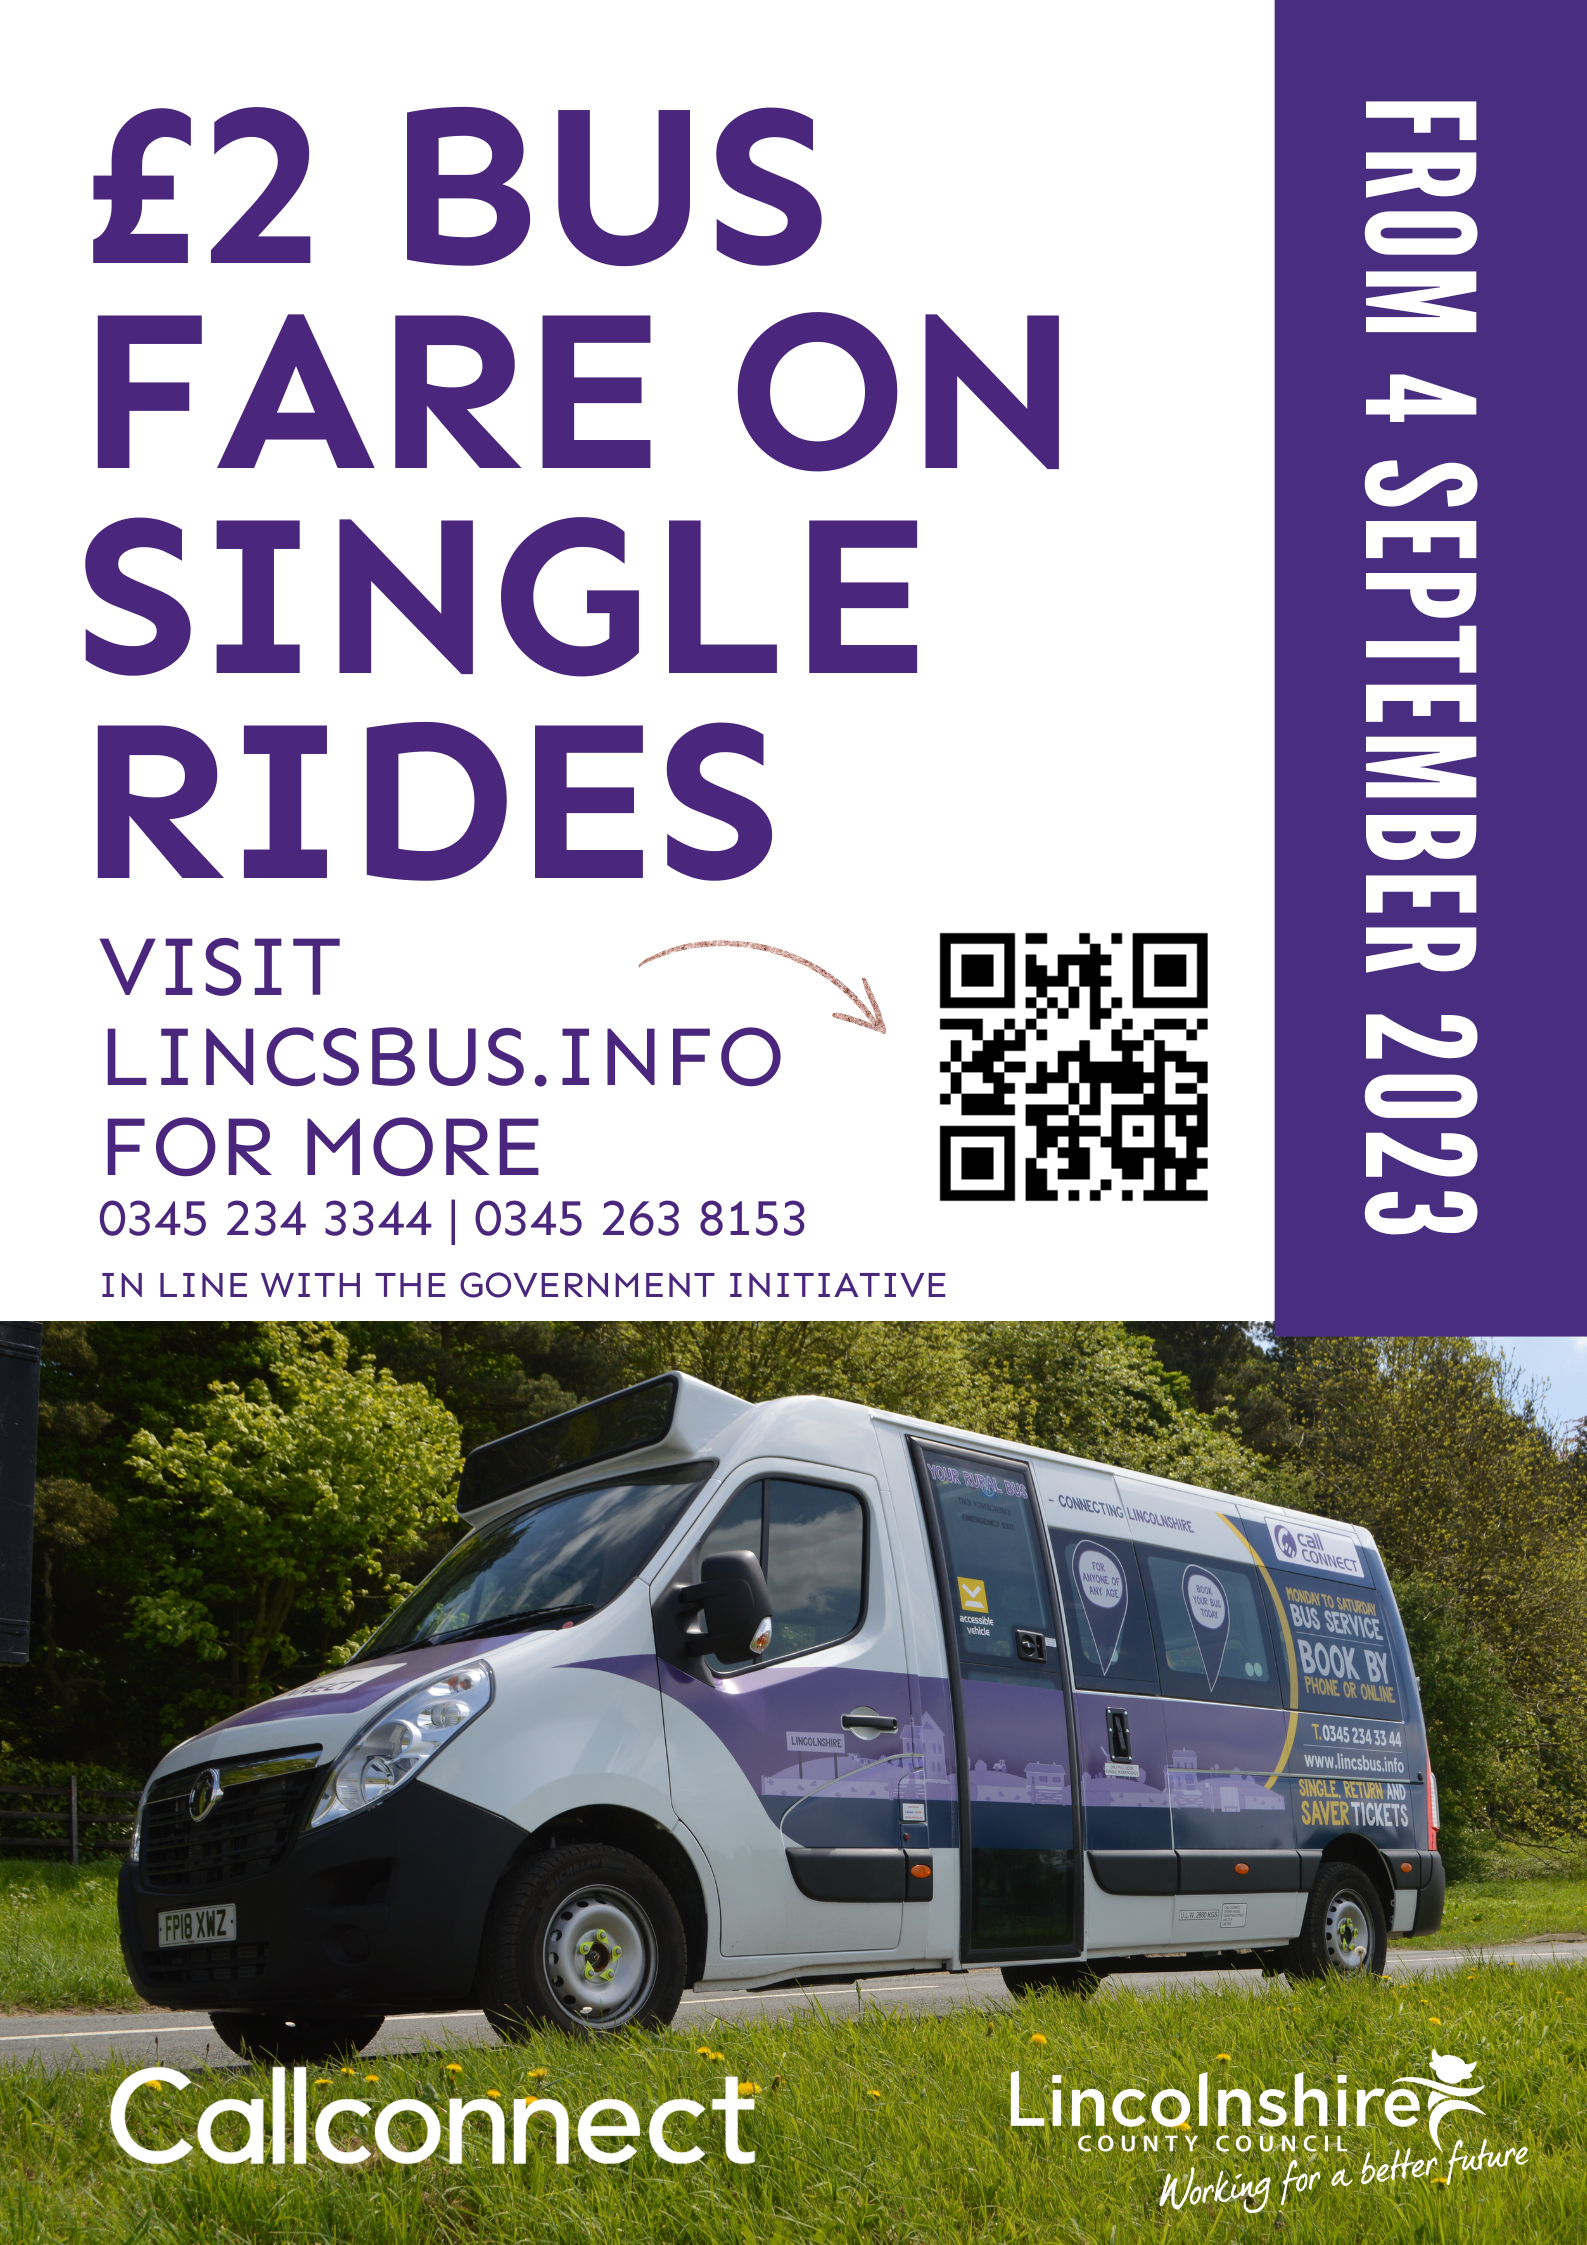 Callconnect £2 Bus Fare on Single Rides...